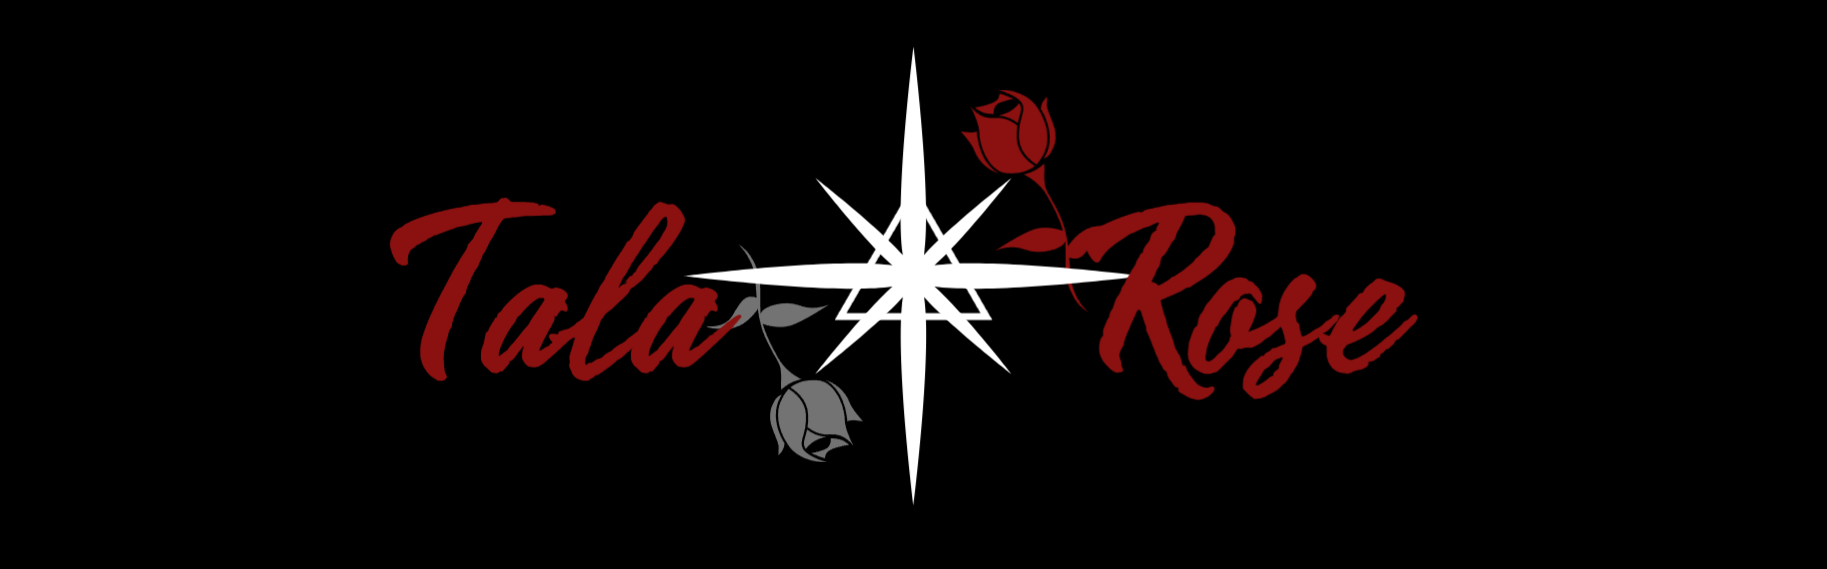 tala-rose member logo title